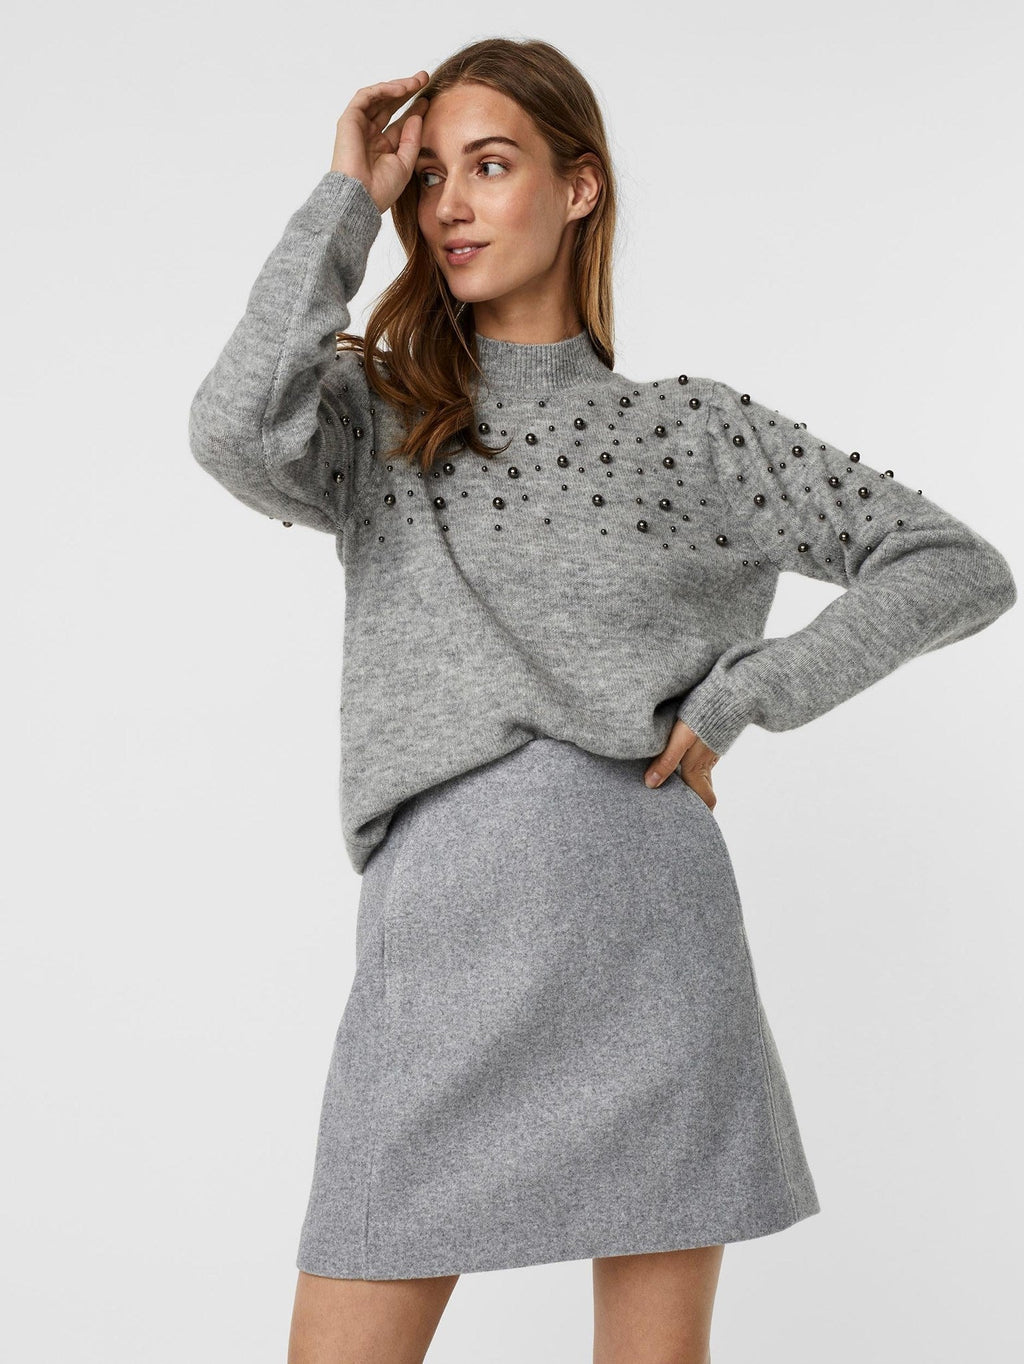 Emilia High Neck Sweater - Light gray